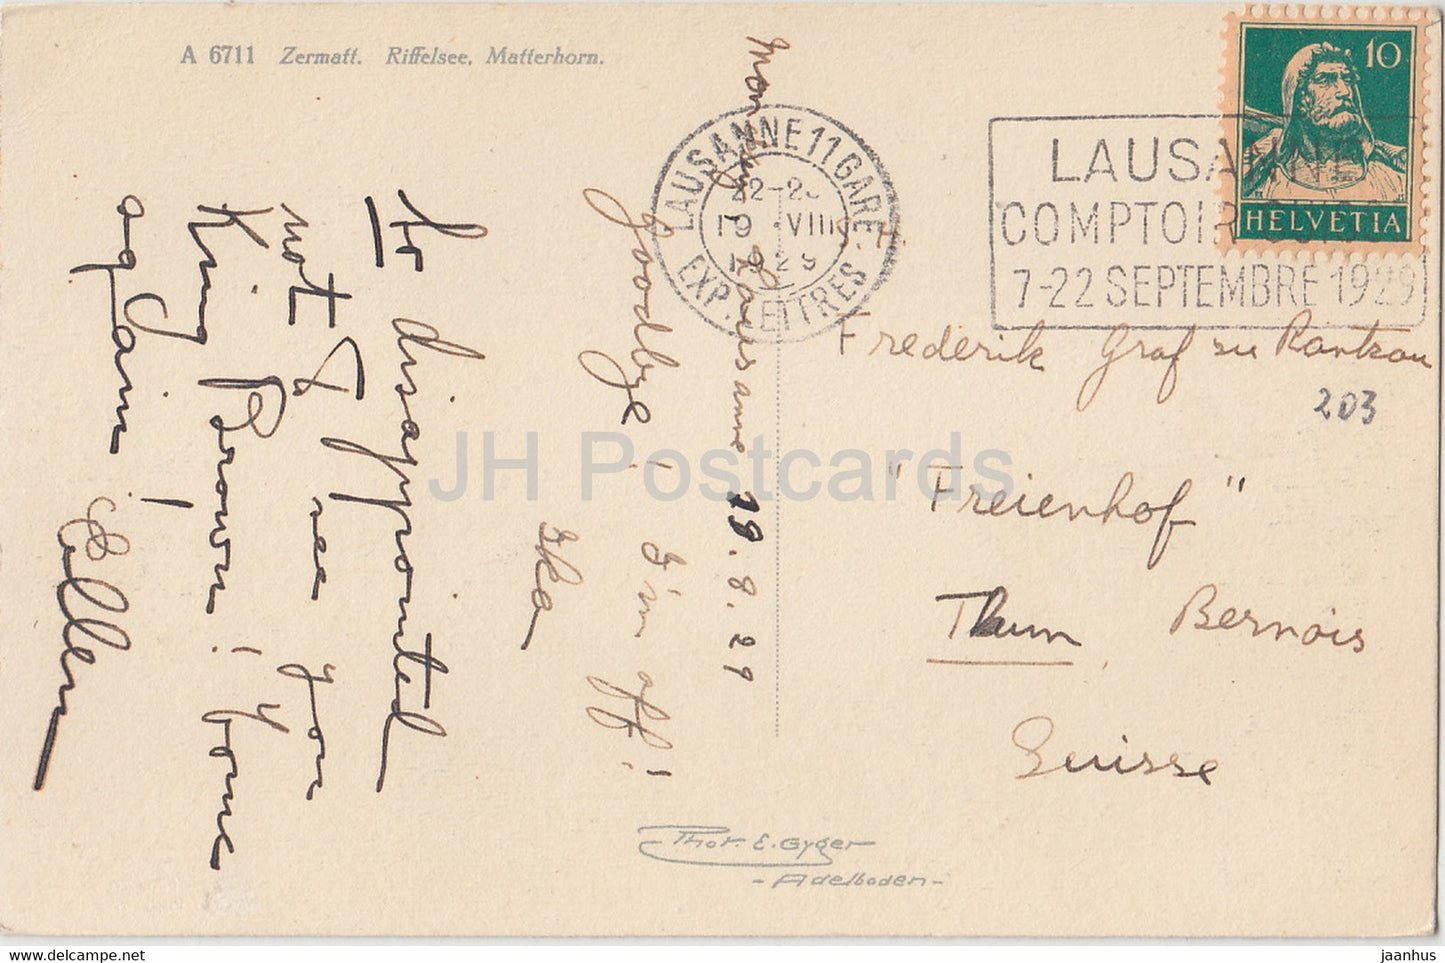 Zermatt - Riffelsee - Matterhorn - 6711 - alte Postkarte - 1929 - Schweiz - gebraucht